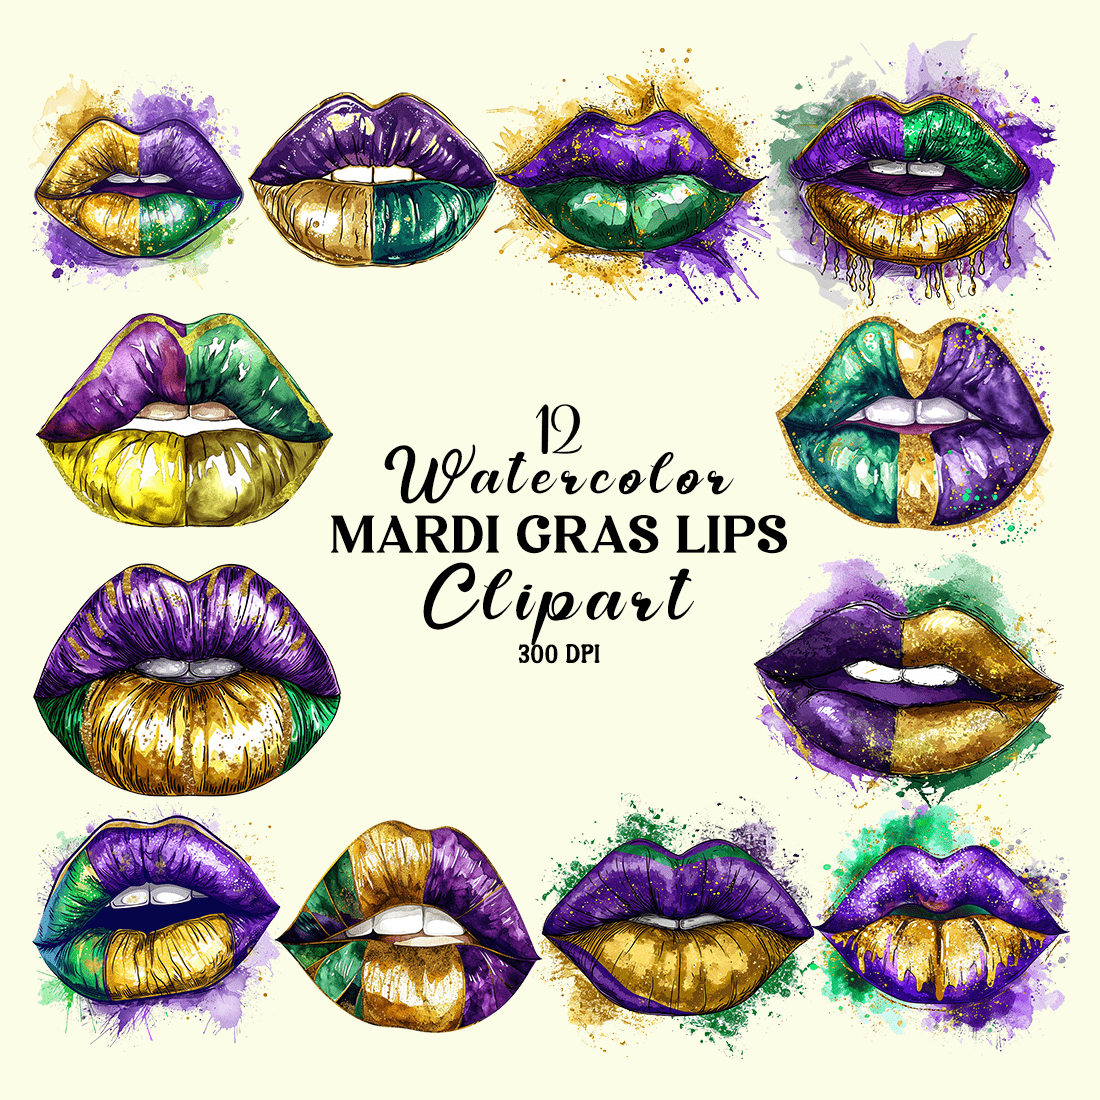 Watercolor Mardi Gras Lips Clipart Bundle cover image.